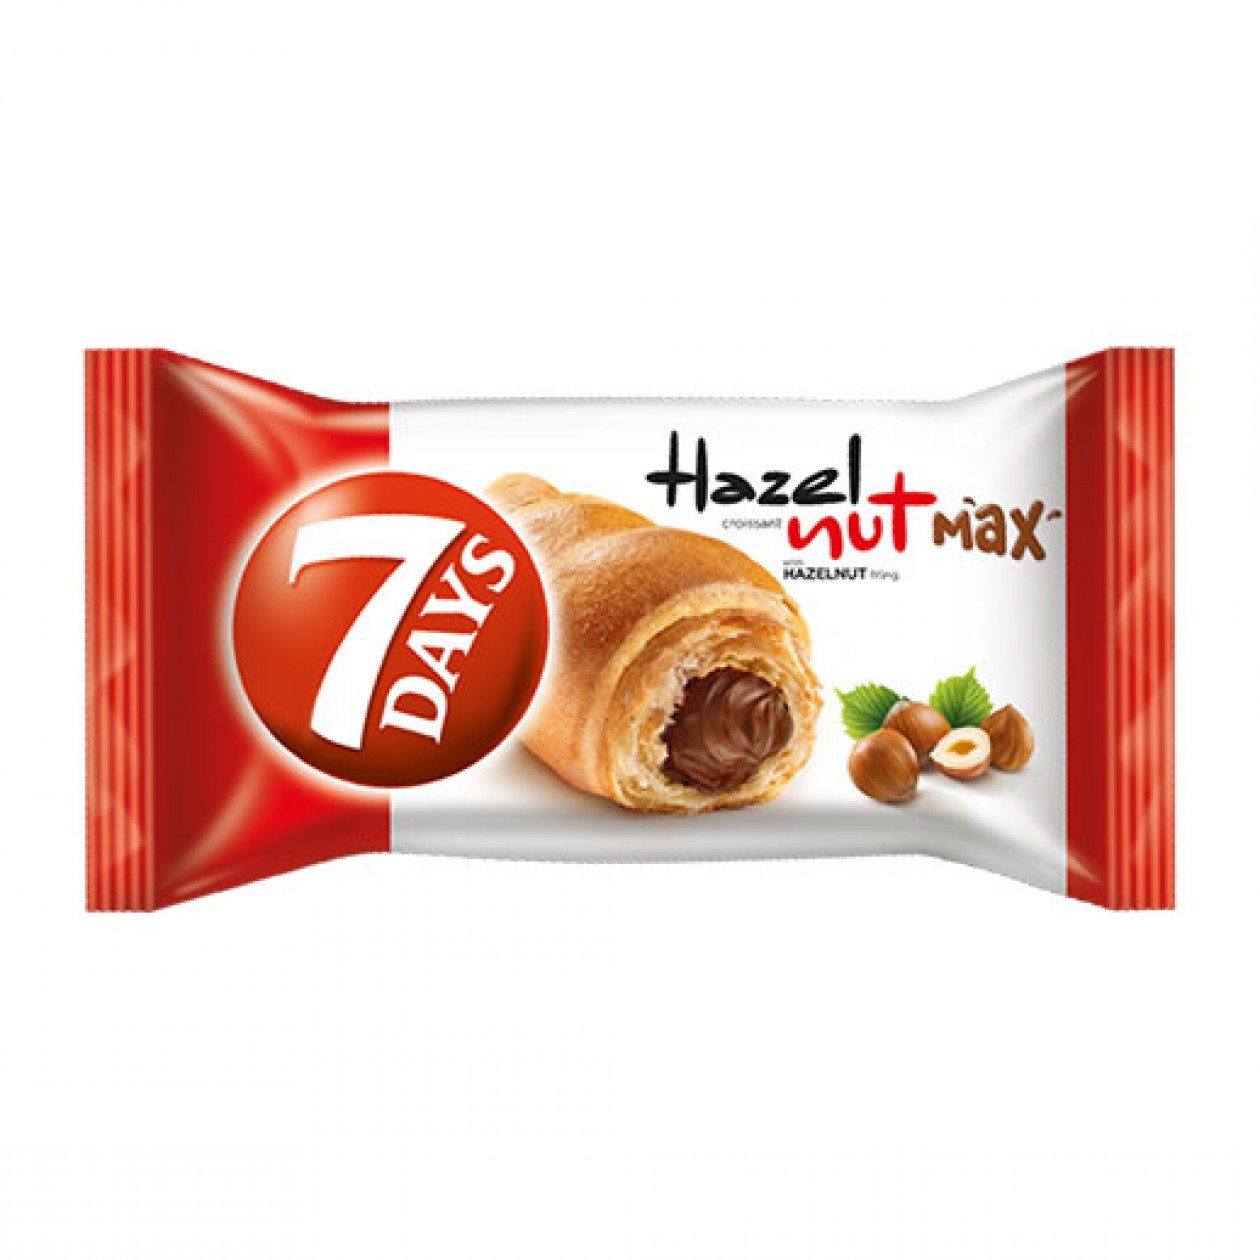 7 Days 80gx20 Double Hazelnut Max Croissant (58382)